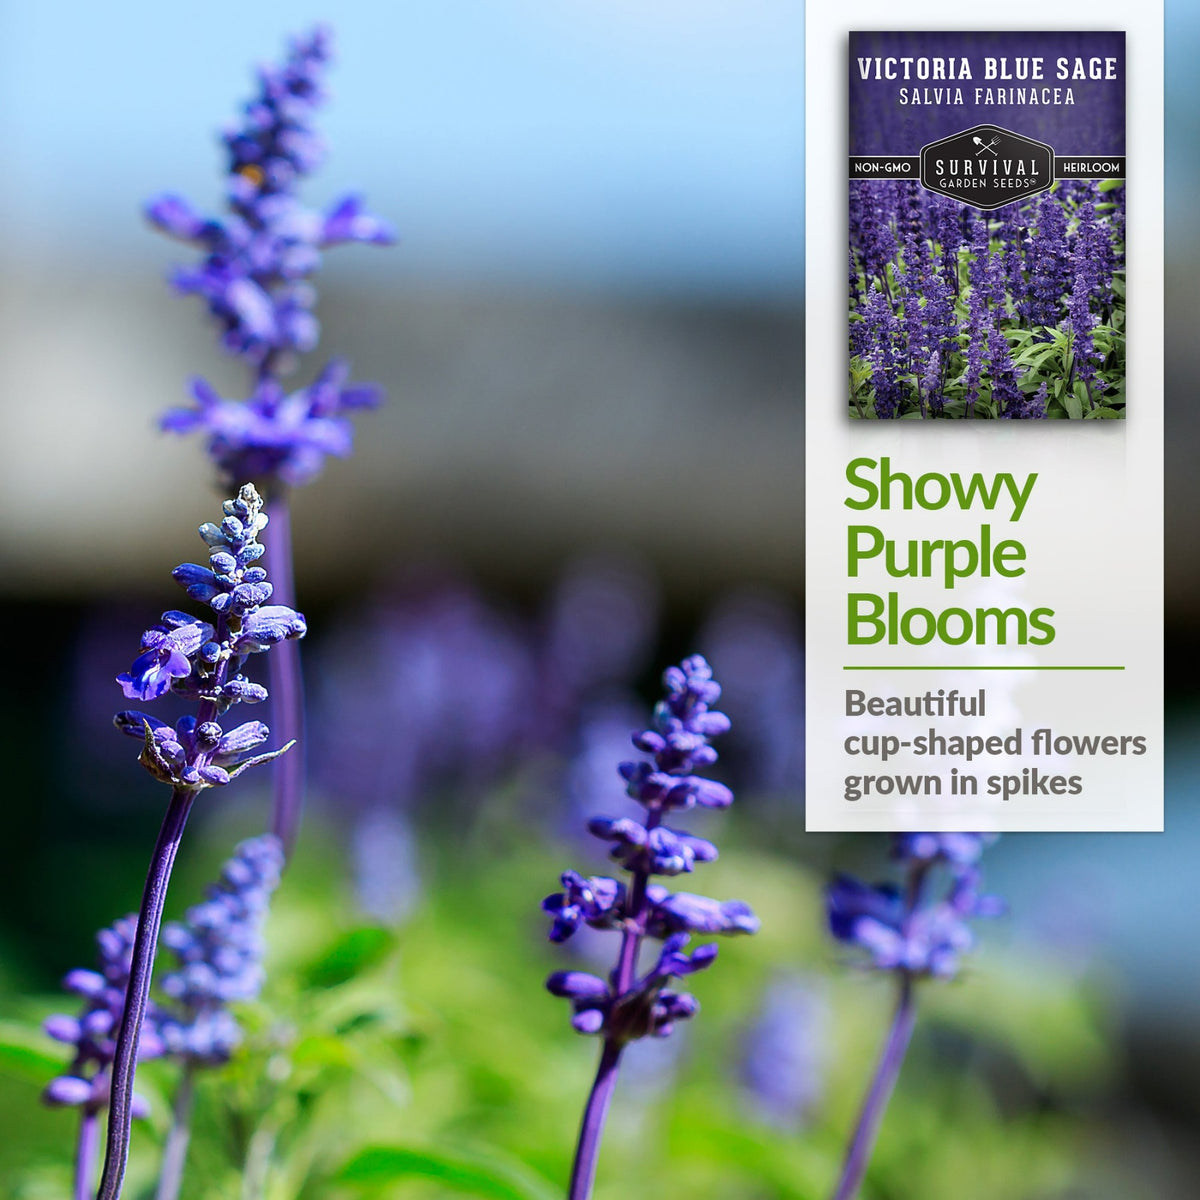 Victoria Blue Sage has showy purple blooms